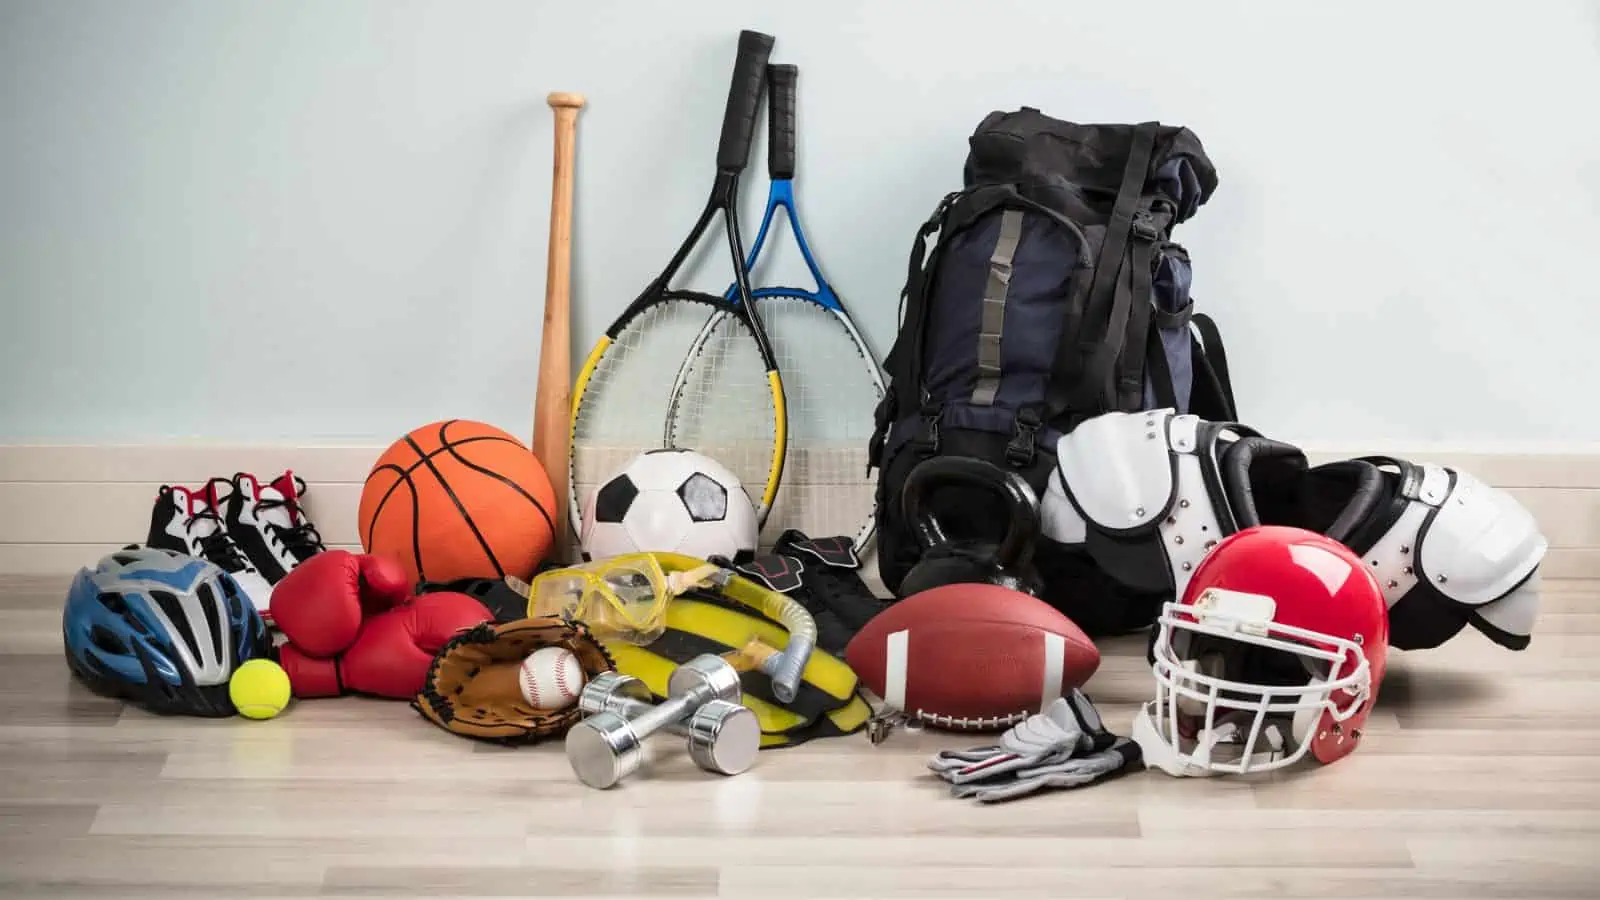 sport gear basketball football soccerball helmets and tennis racket